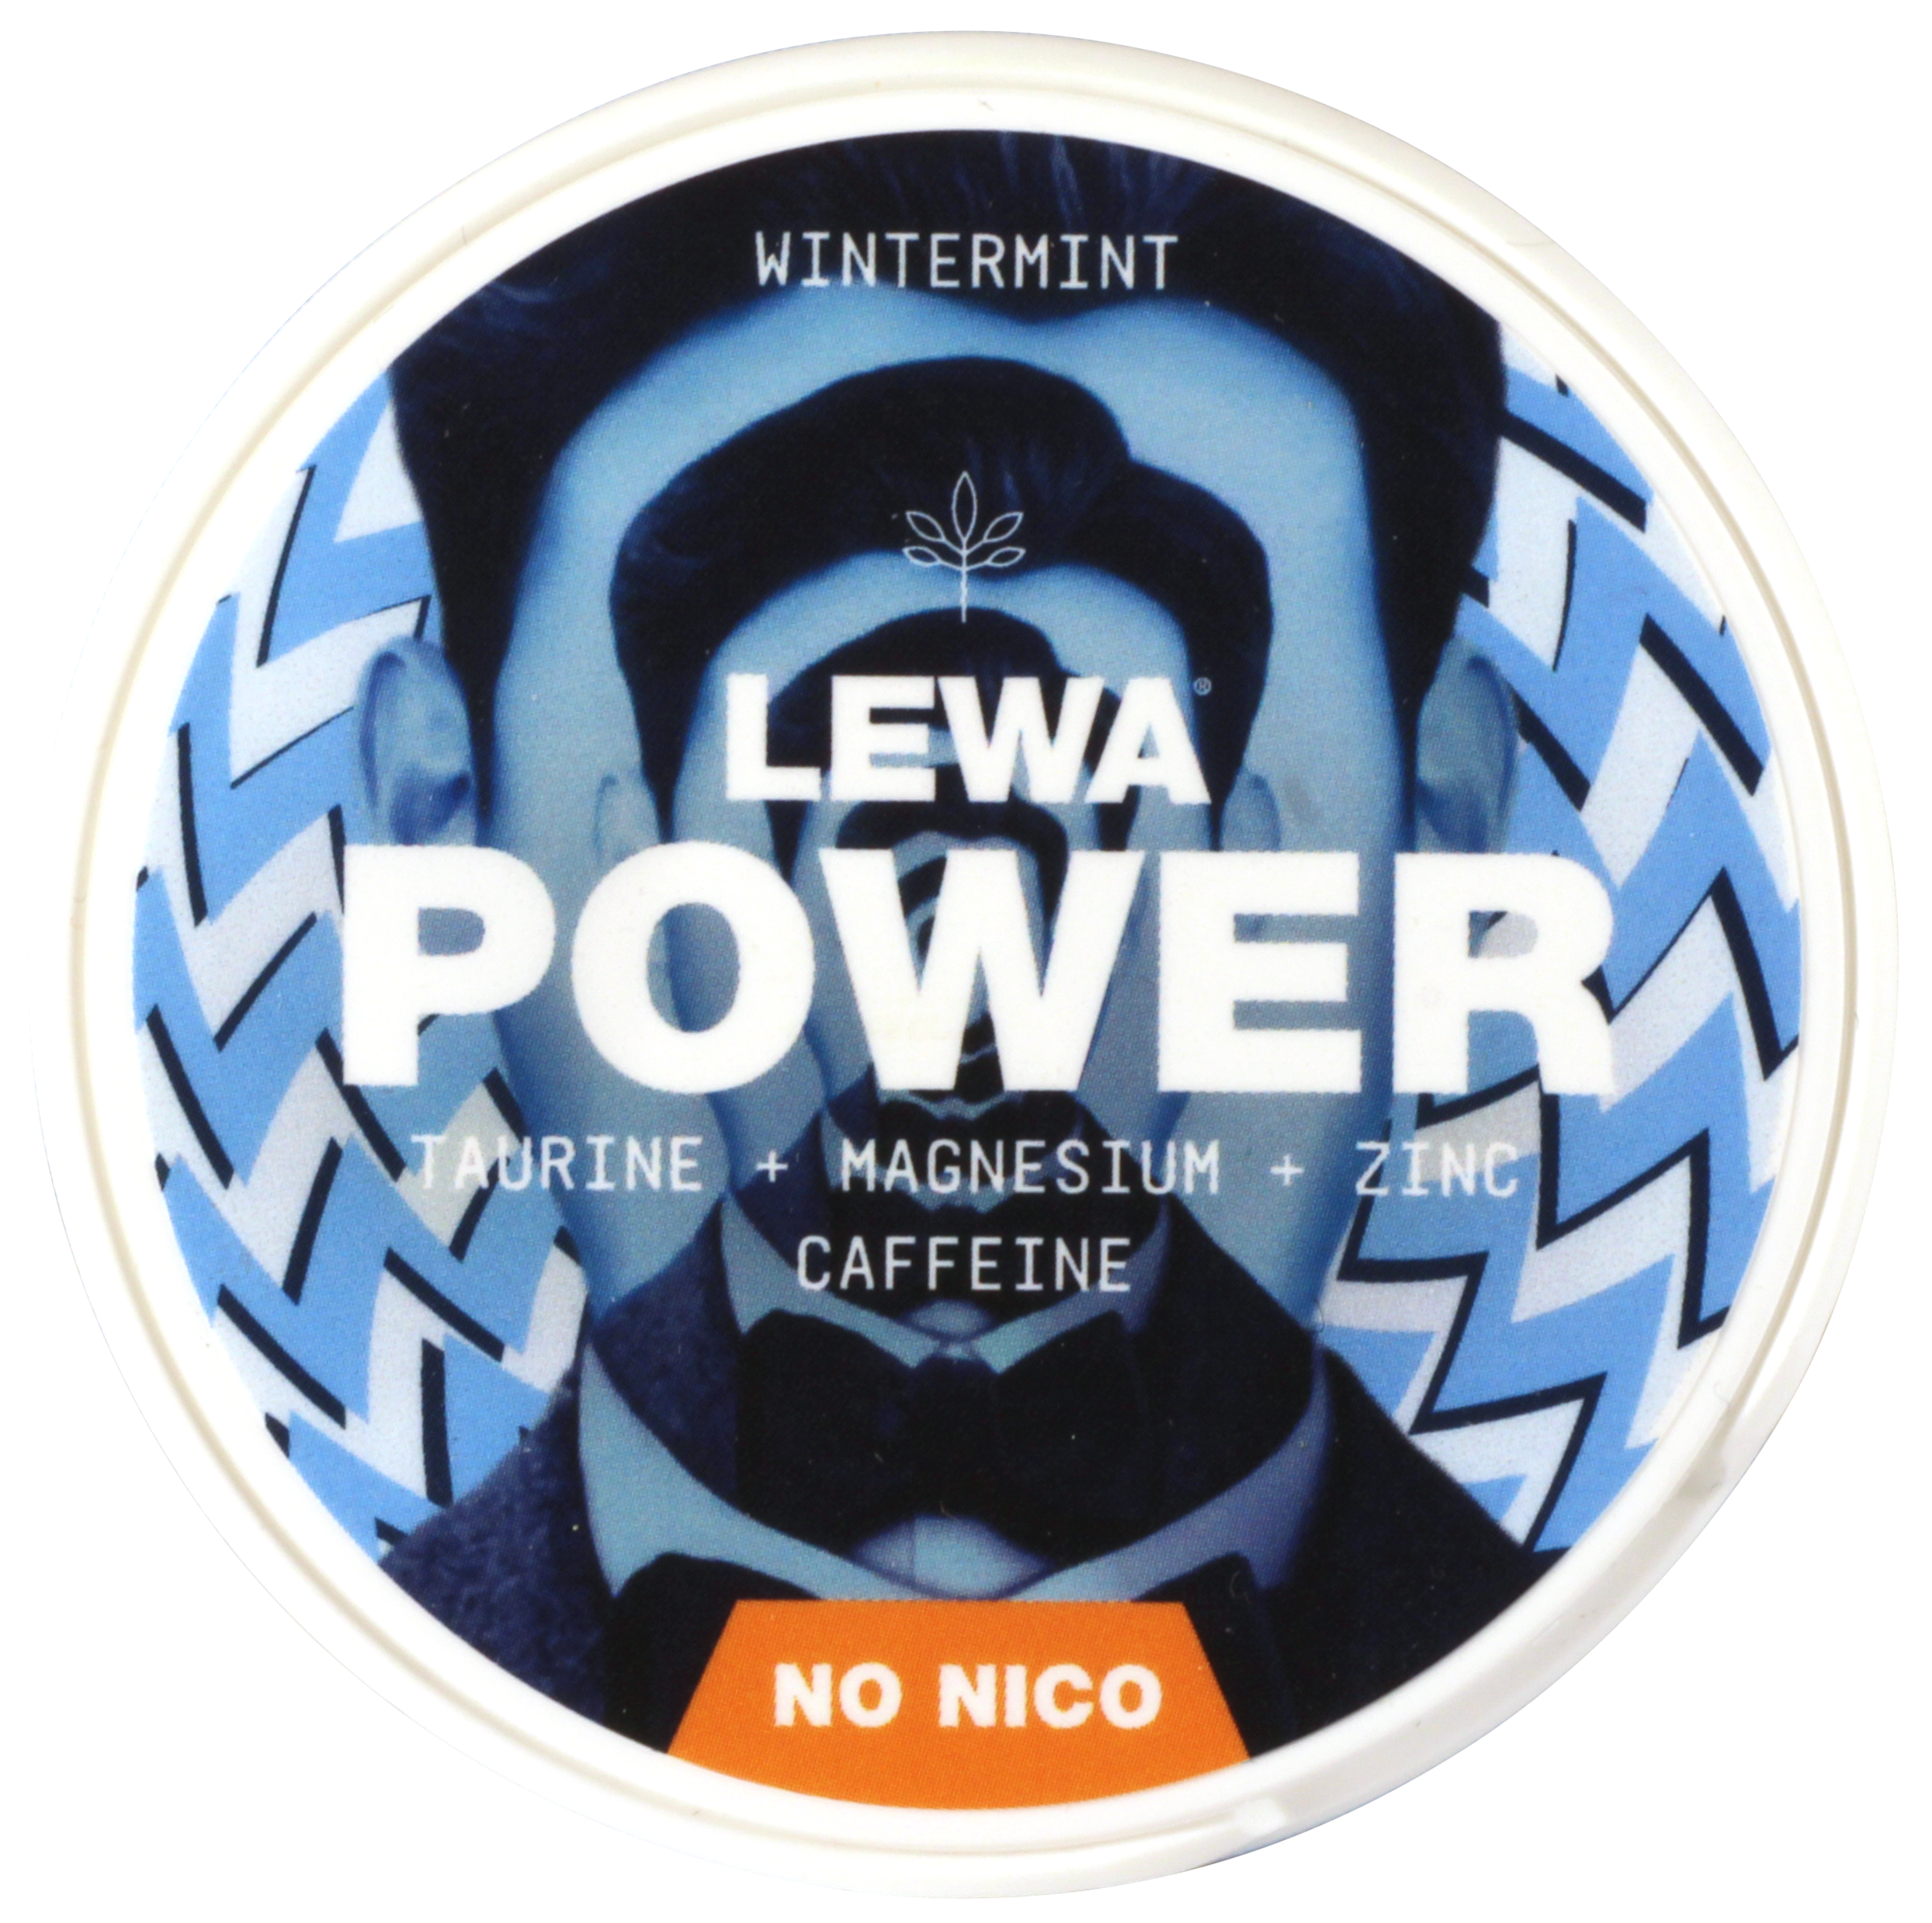 LEWA Power: Wintermint